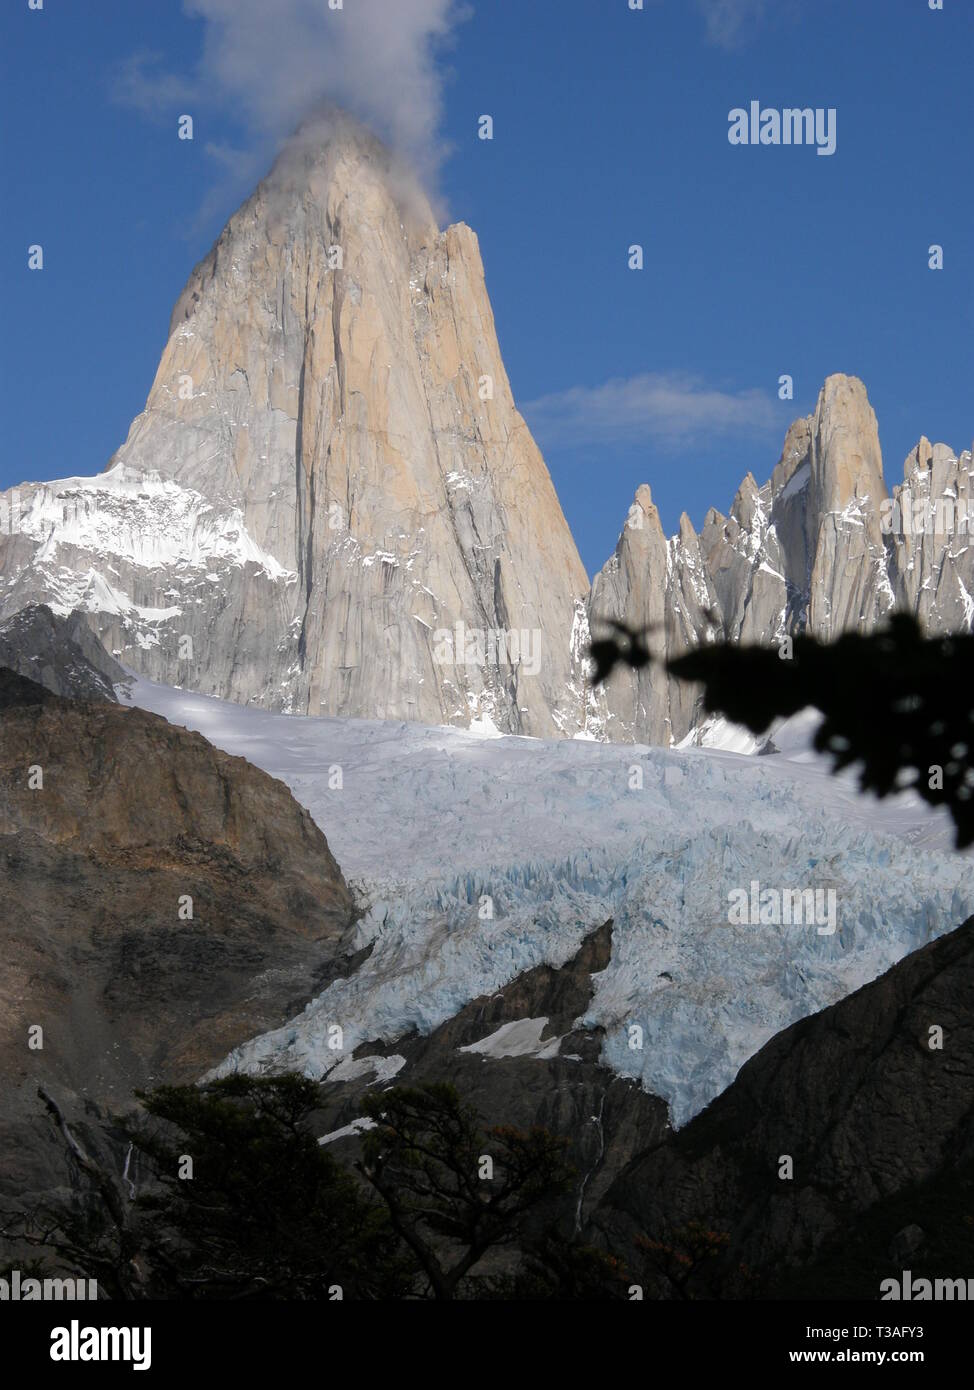 Smoking Mount Fitz Roy, Glaciers National Park Argentina, Patagonia Stock Photo